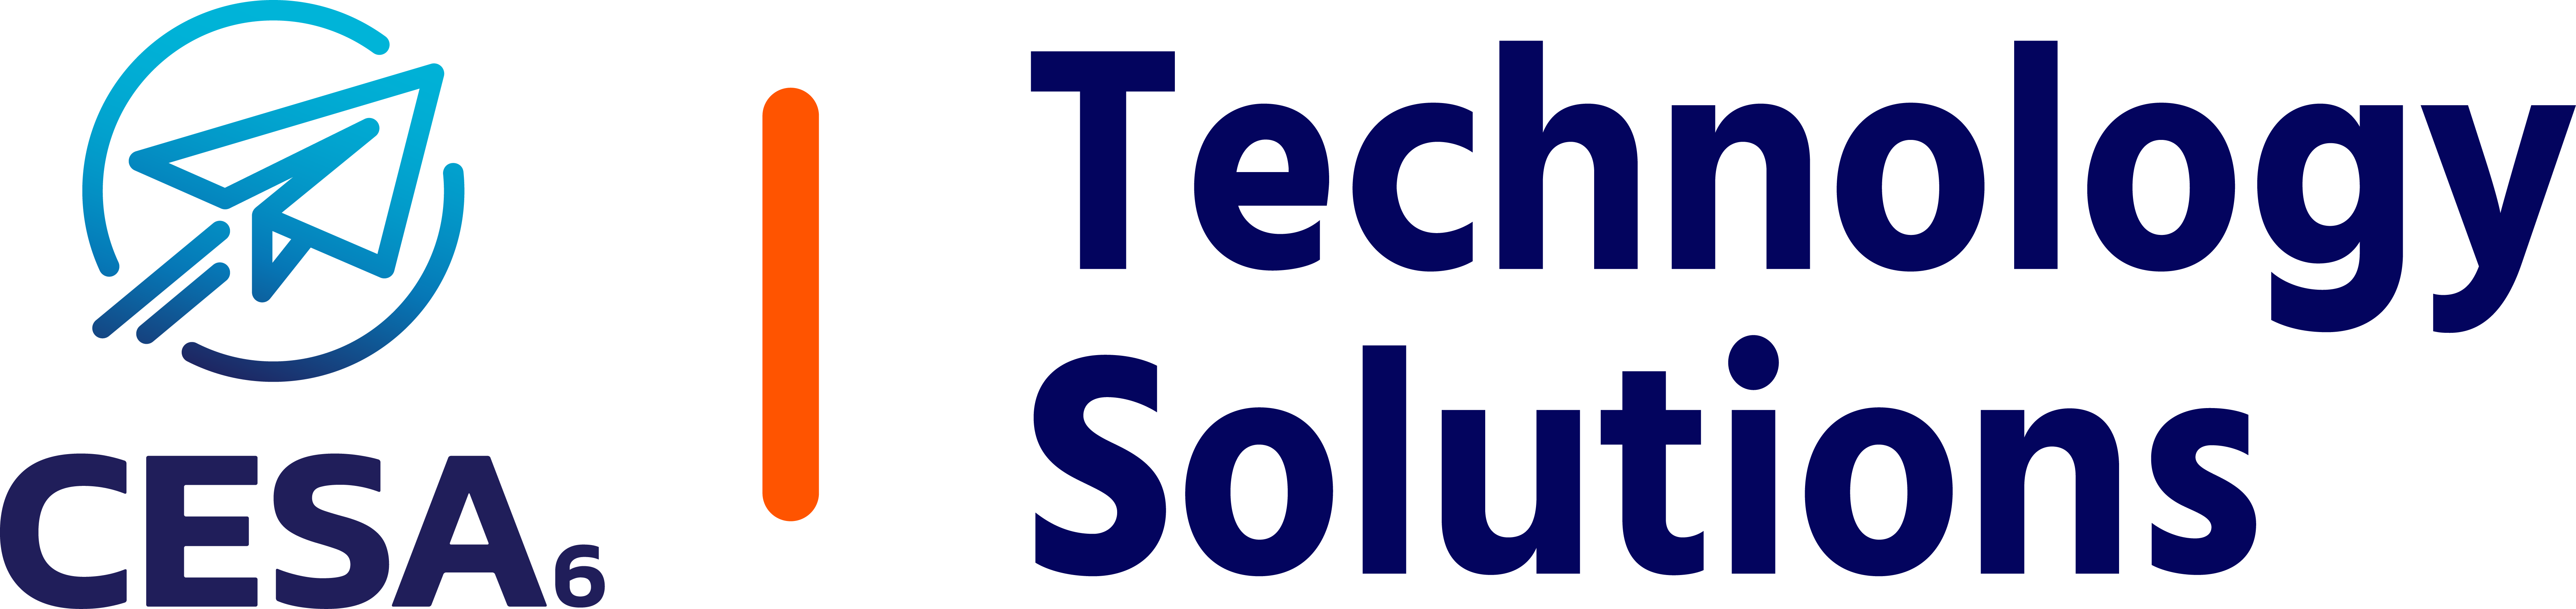 Technology Solutions Center